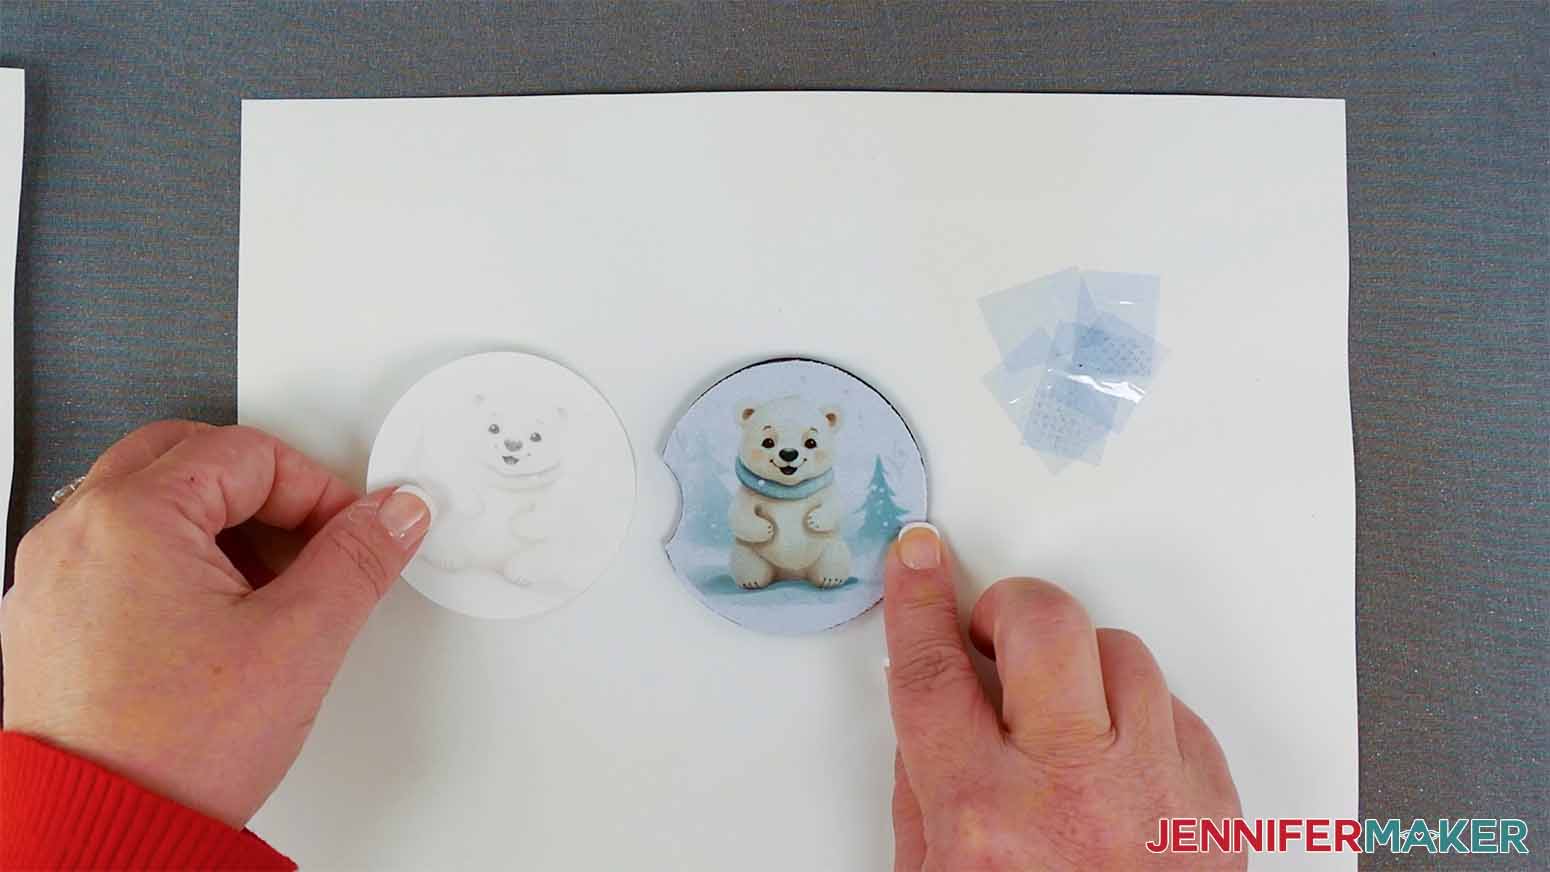 Finished neoprene sublimation coaster with winter polar bear design.